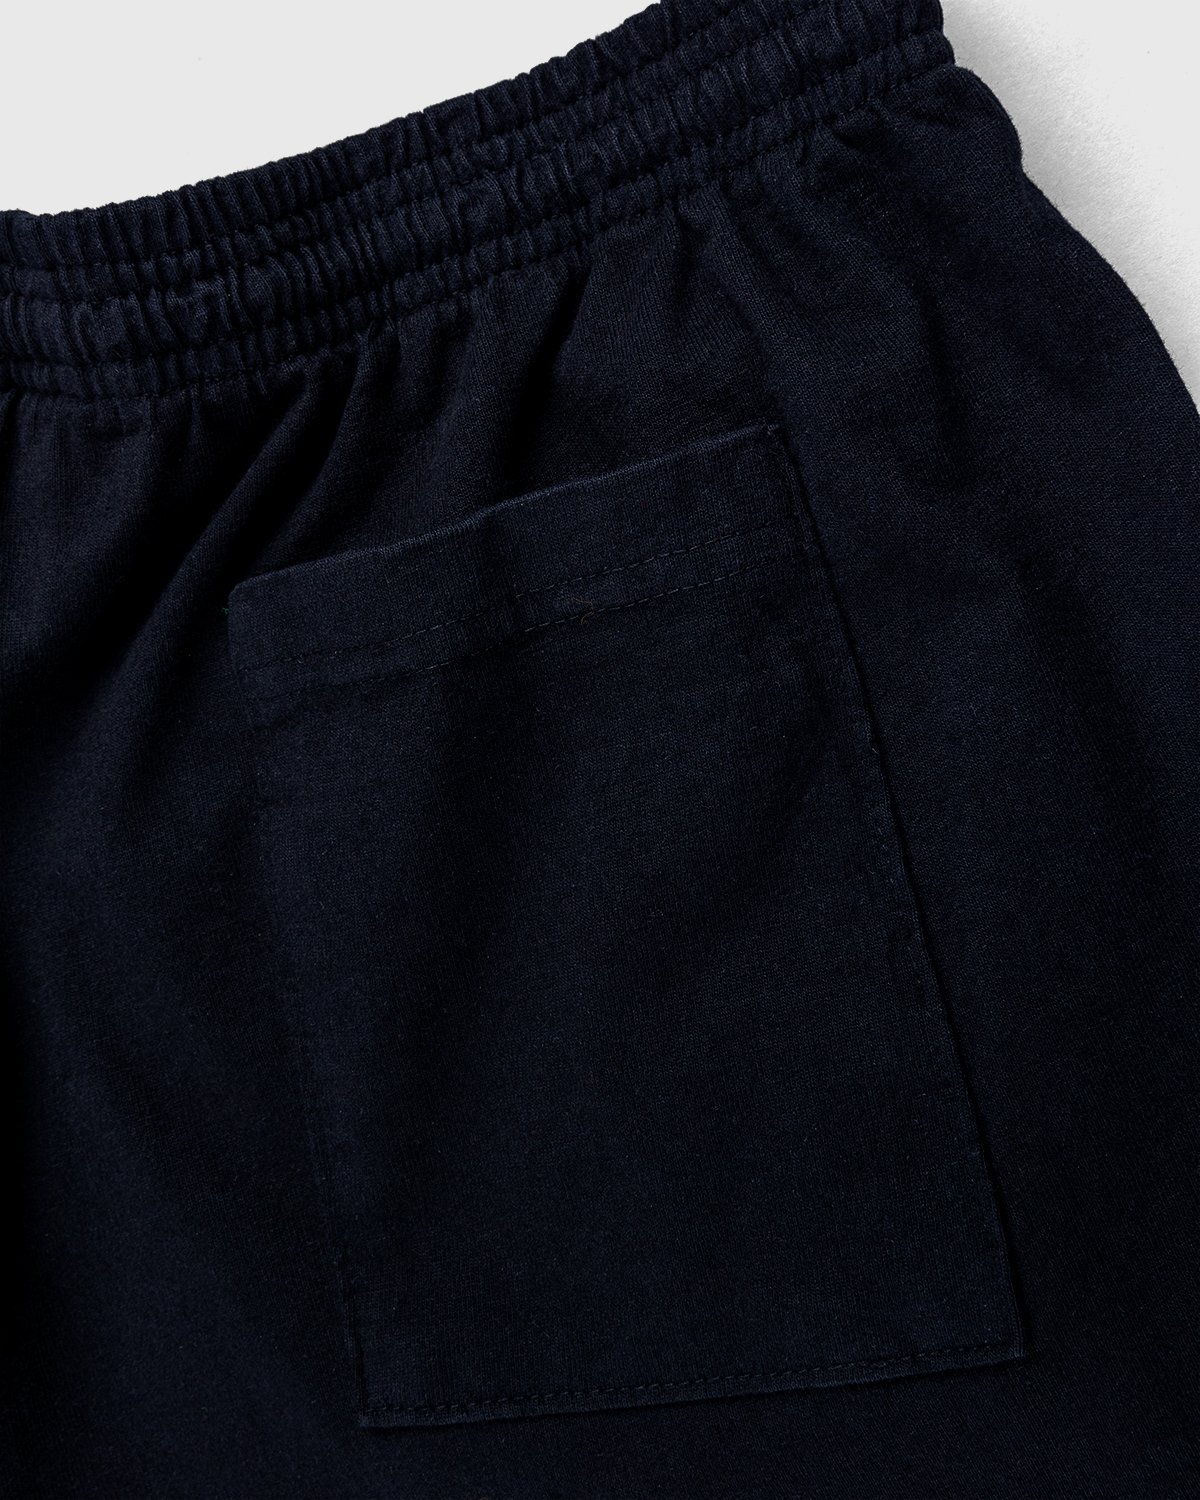 Bstroy x Highsnobiety - Shorts Black - Clothing - Black - Image 3